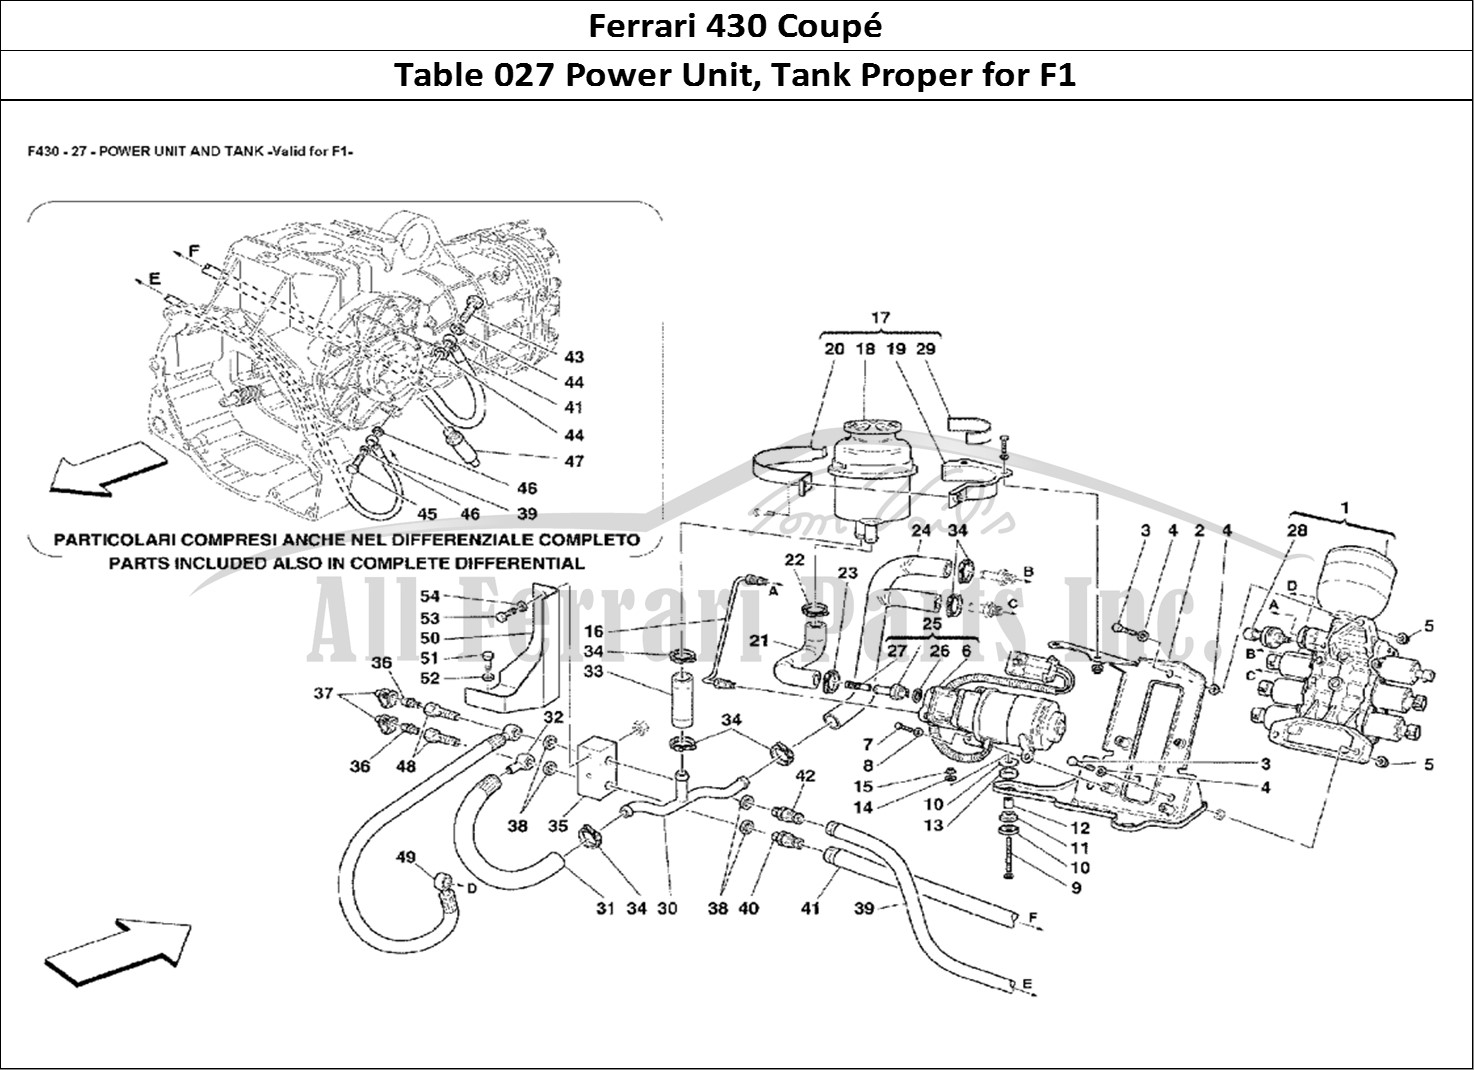 Ferrari Parts Ferrari 430 Coup Page 027 Power Unit and Tank -Vali